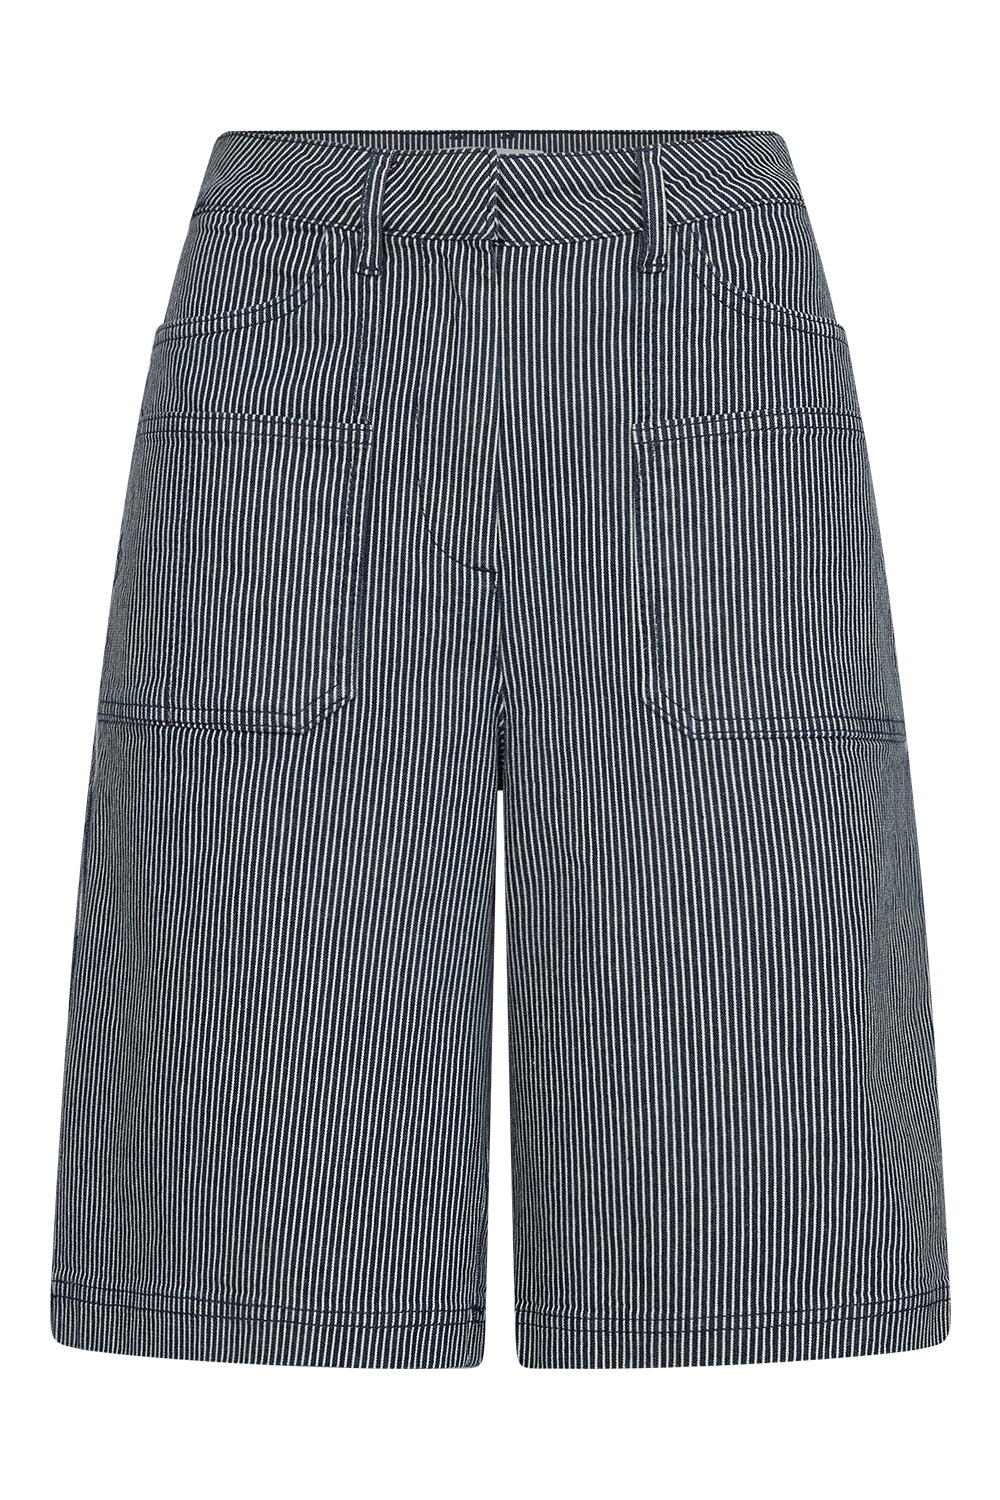 IVY Copenhagen IVY-Brooke Worker Shorts Sailor Stripe Jeans & Pants 00 Striped